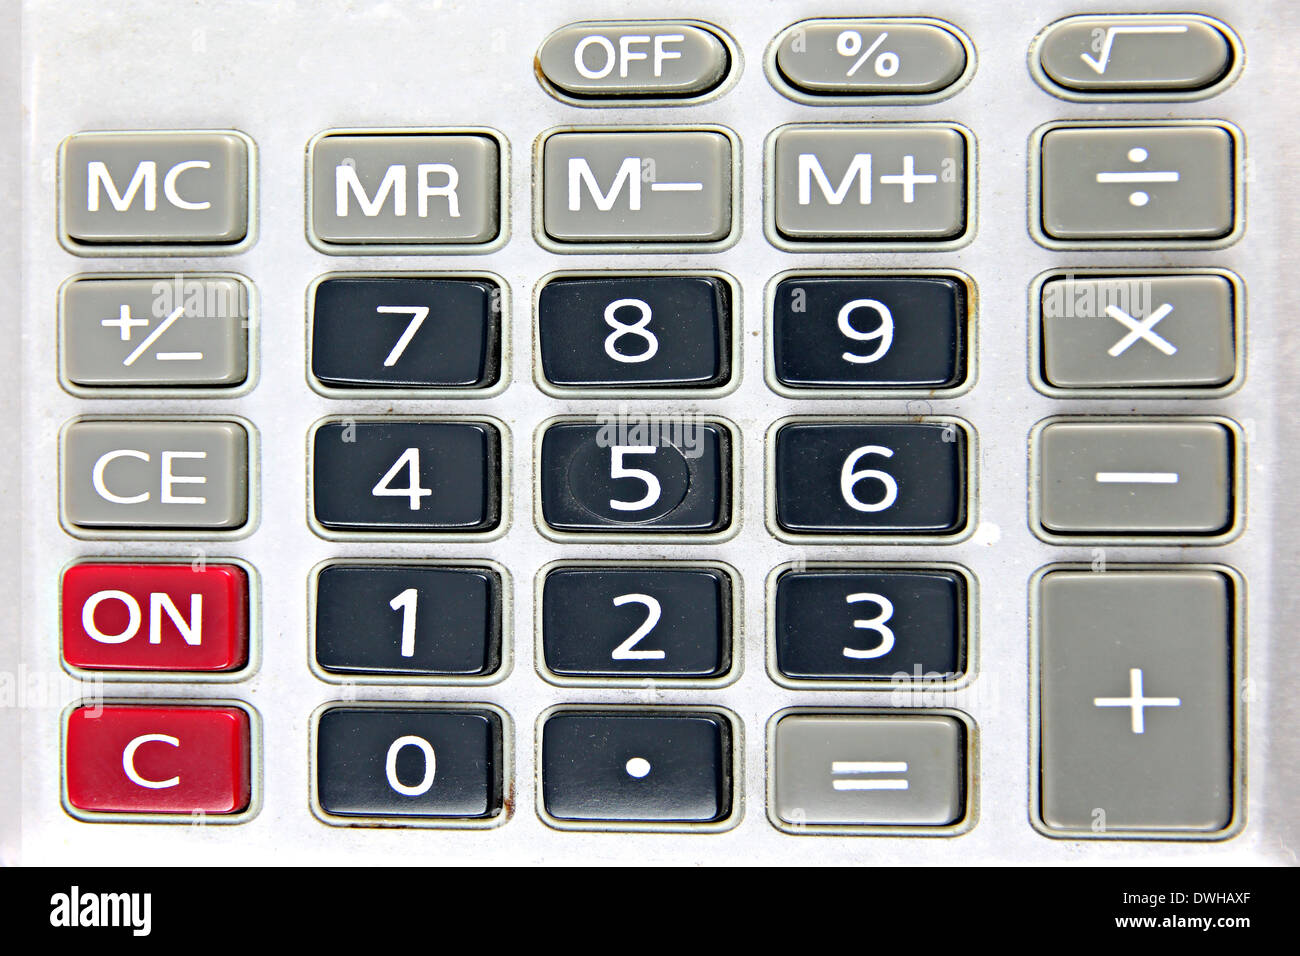 Keypad of a calculator isolated on white background. Stock Photo